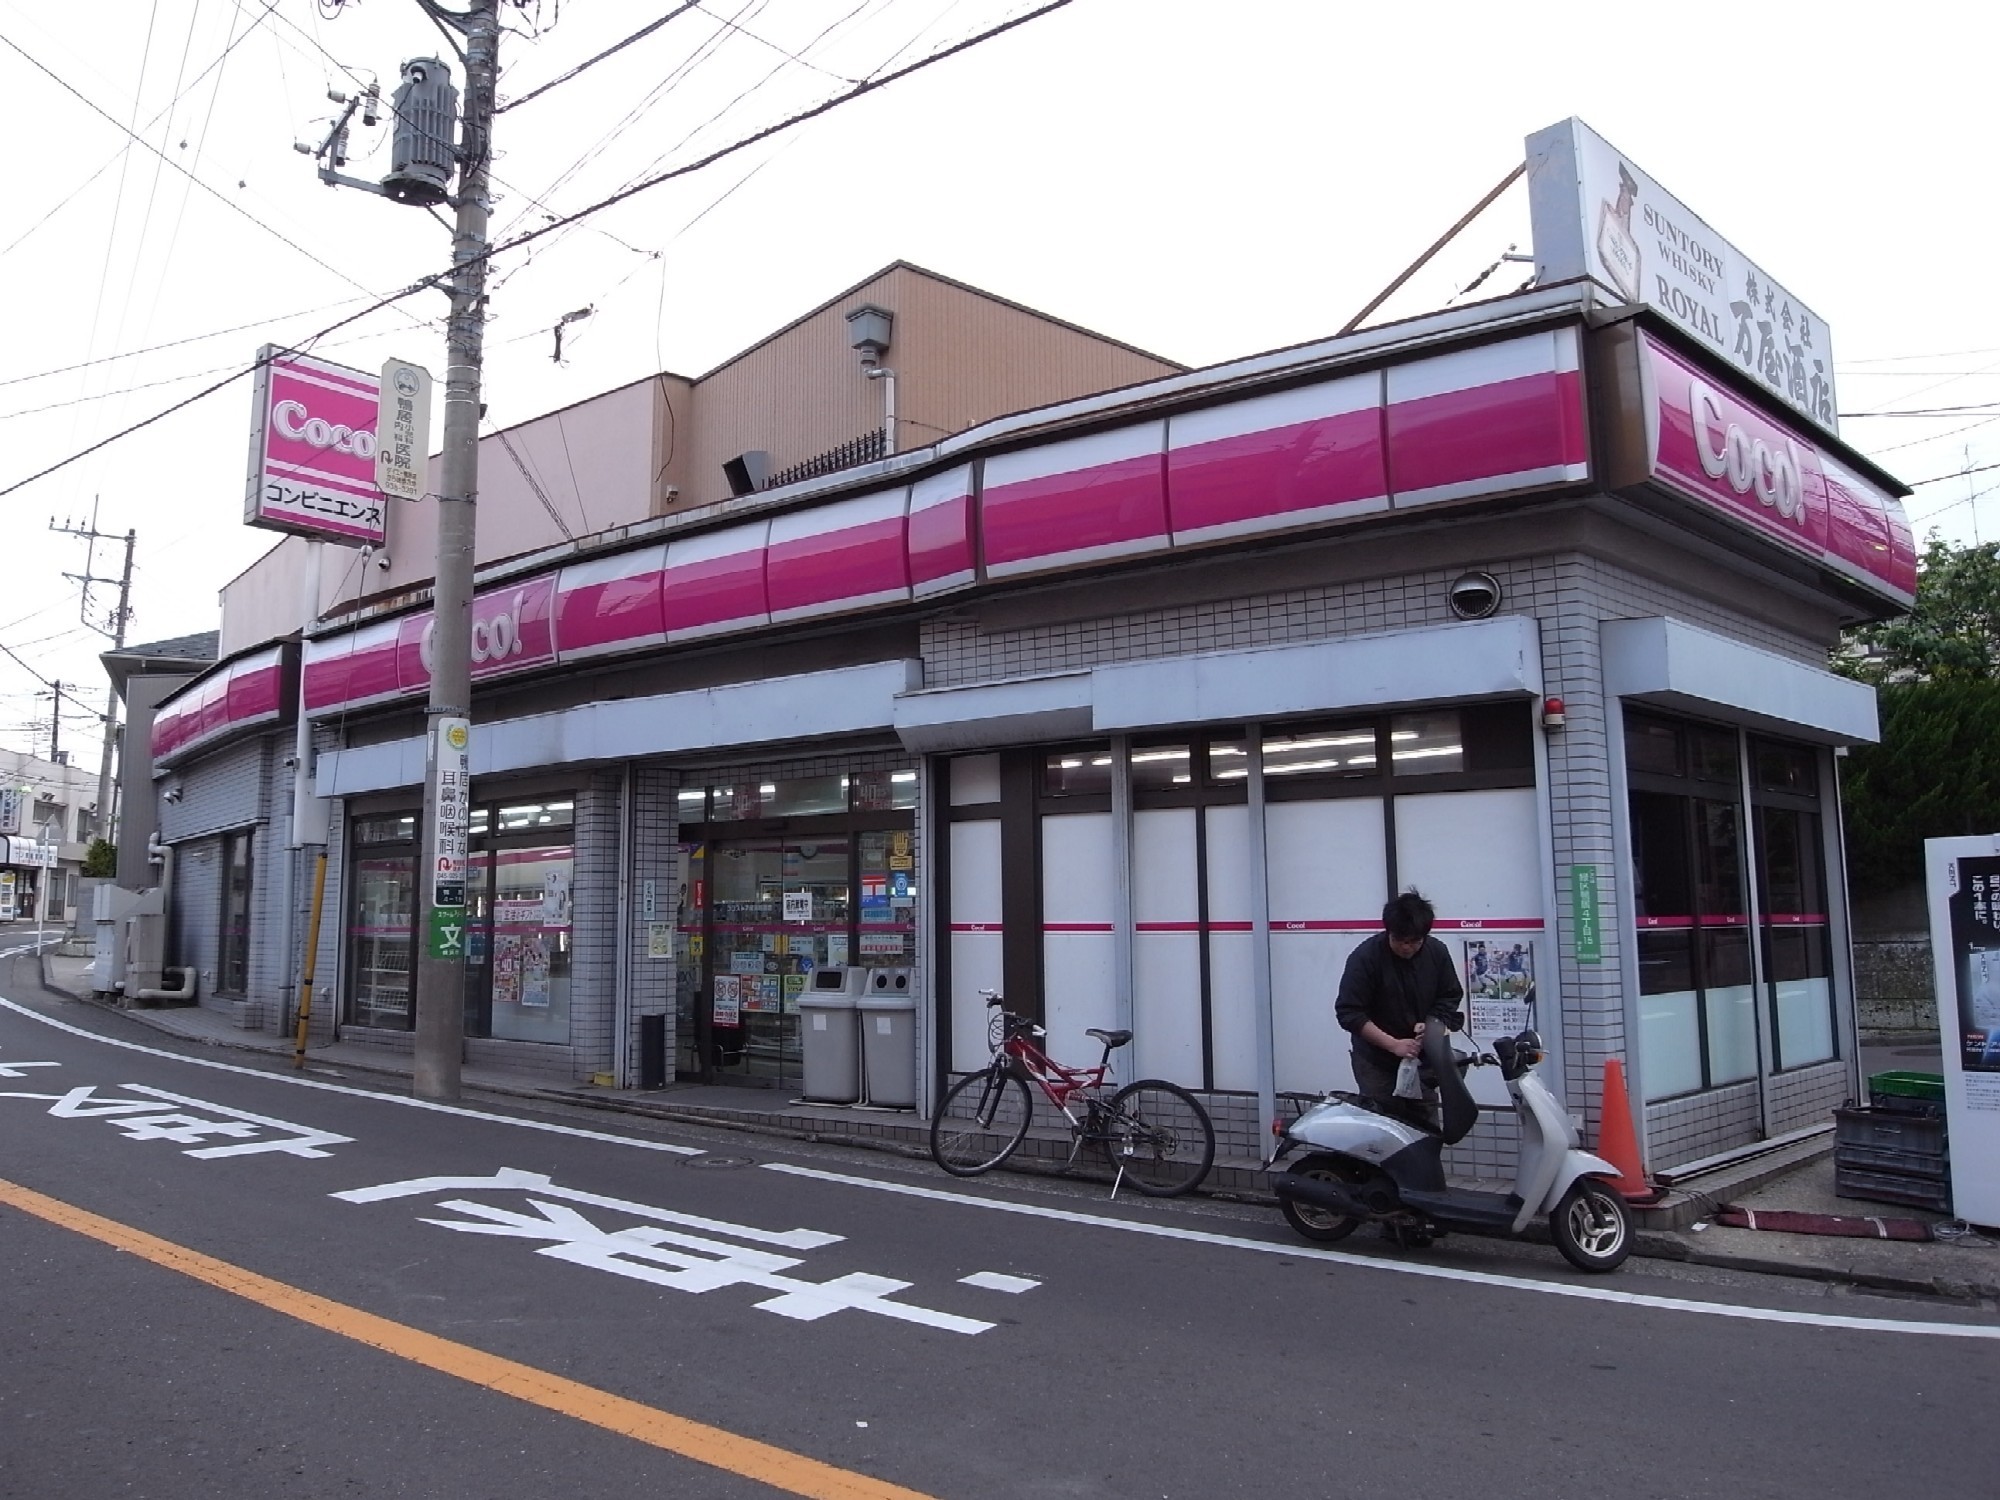 Convenience store. 470m to the Coco store Yokohama lintel store (convenience store)